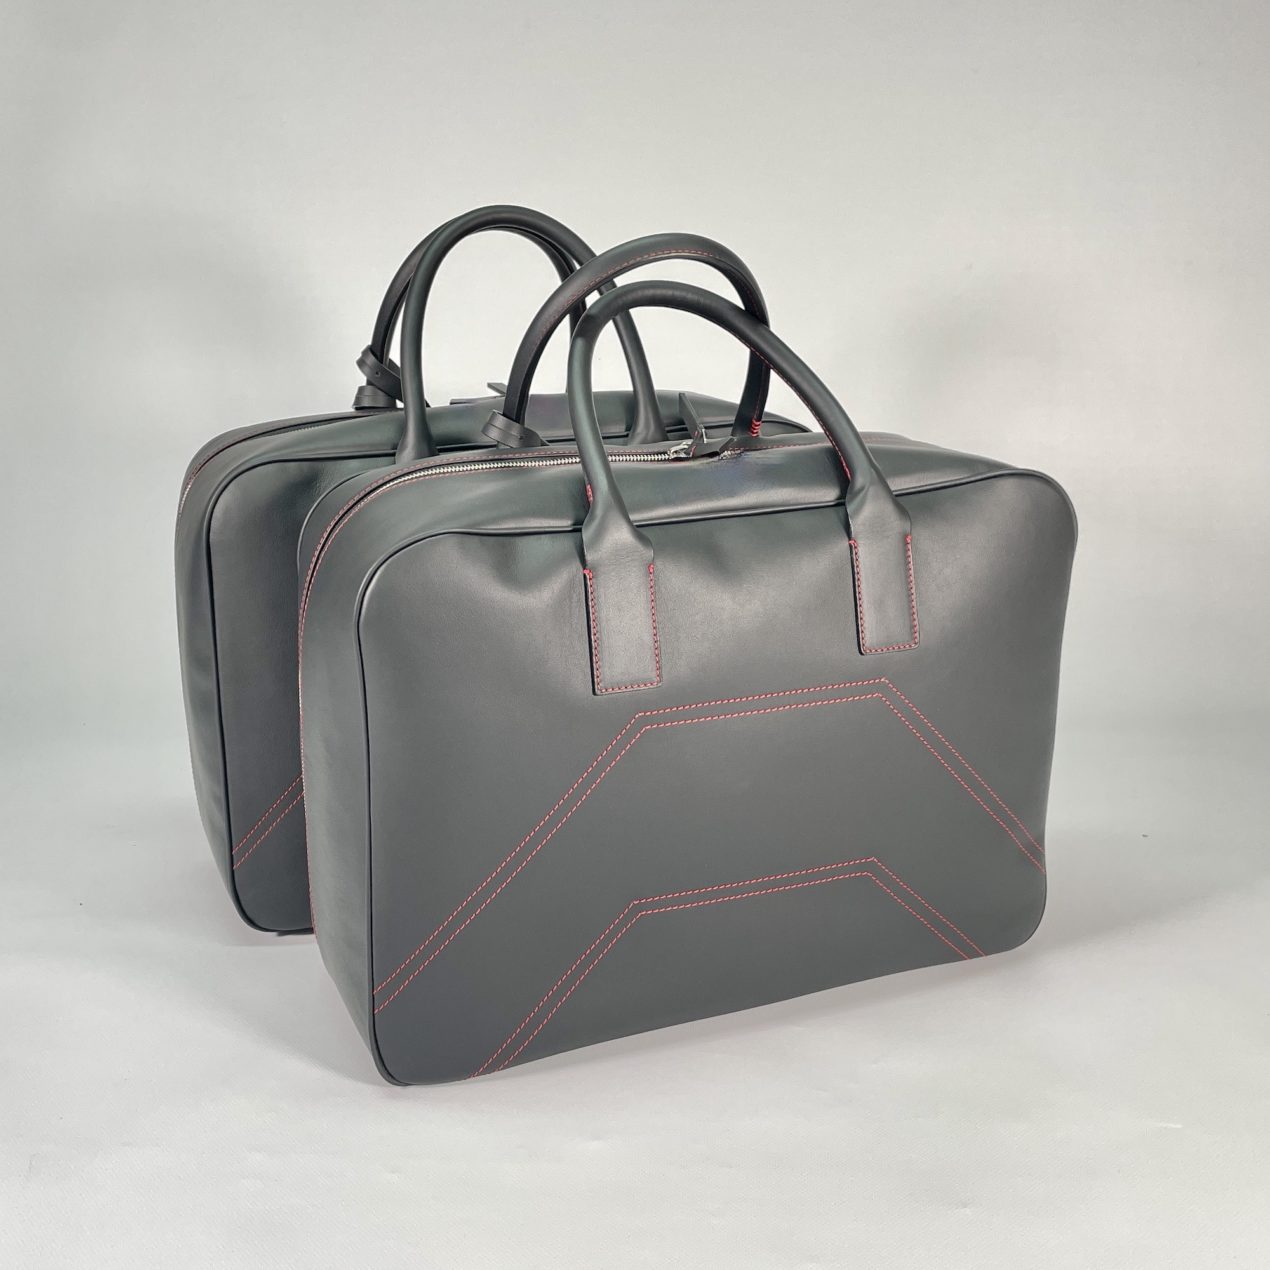 F12 Berlinetta suitcase Racing seats stitching Nappa black leather Schedoni